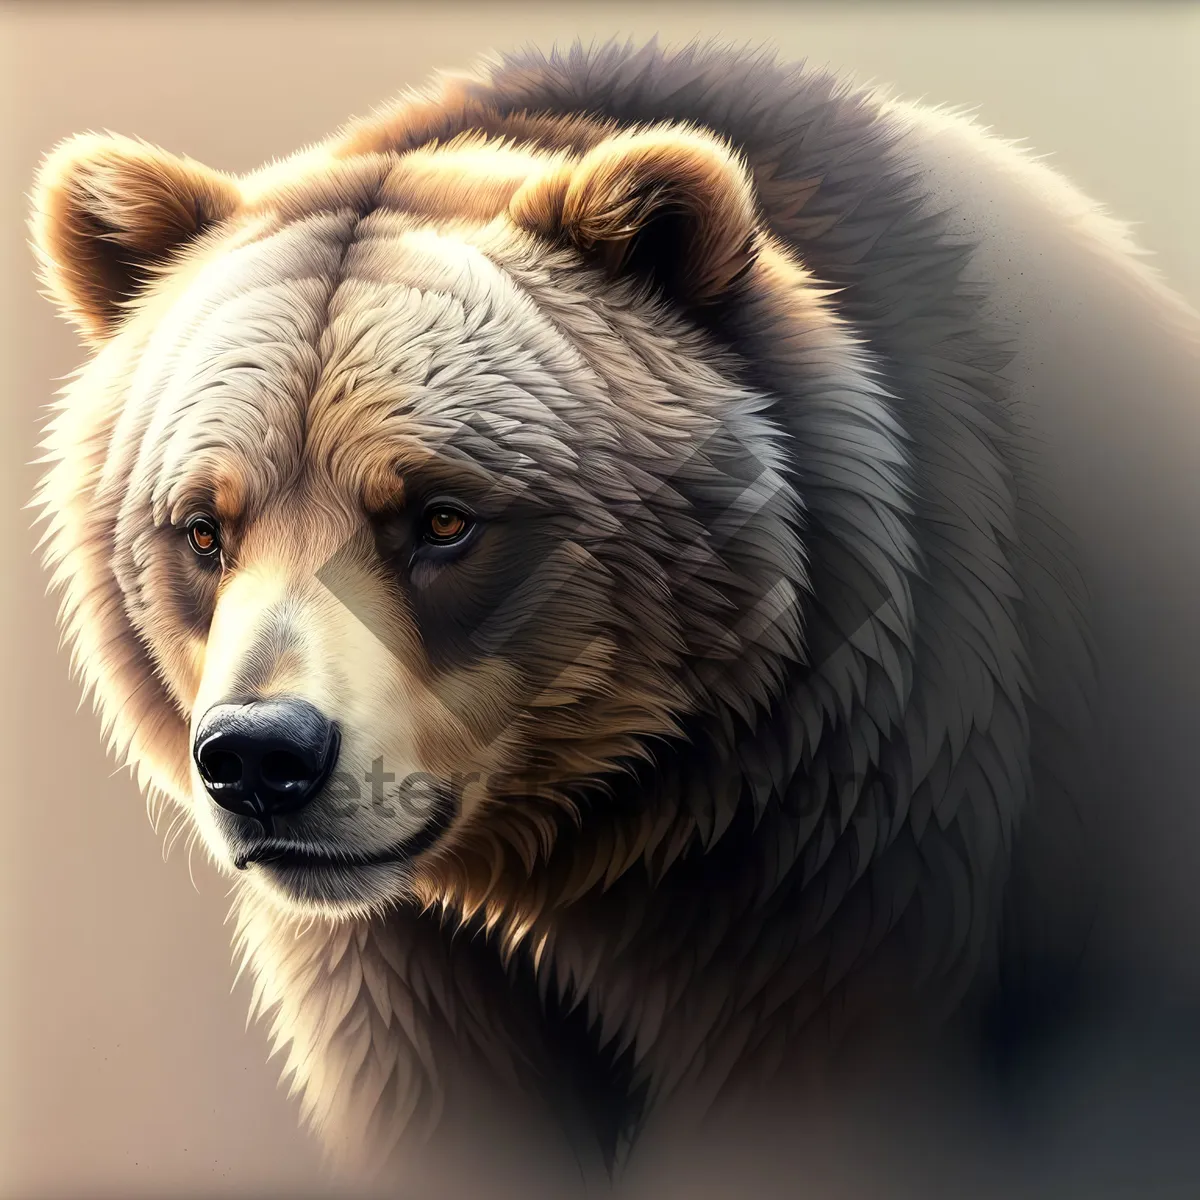 Picture of Wild Brown Bear – Majestic Fur Predator in the Wild